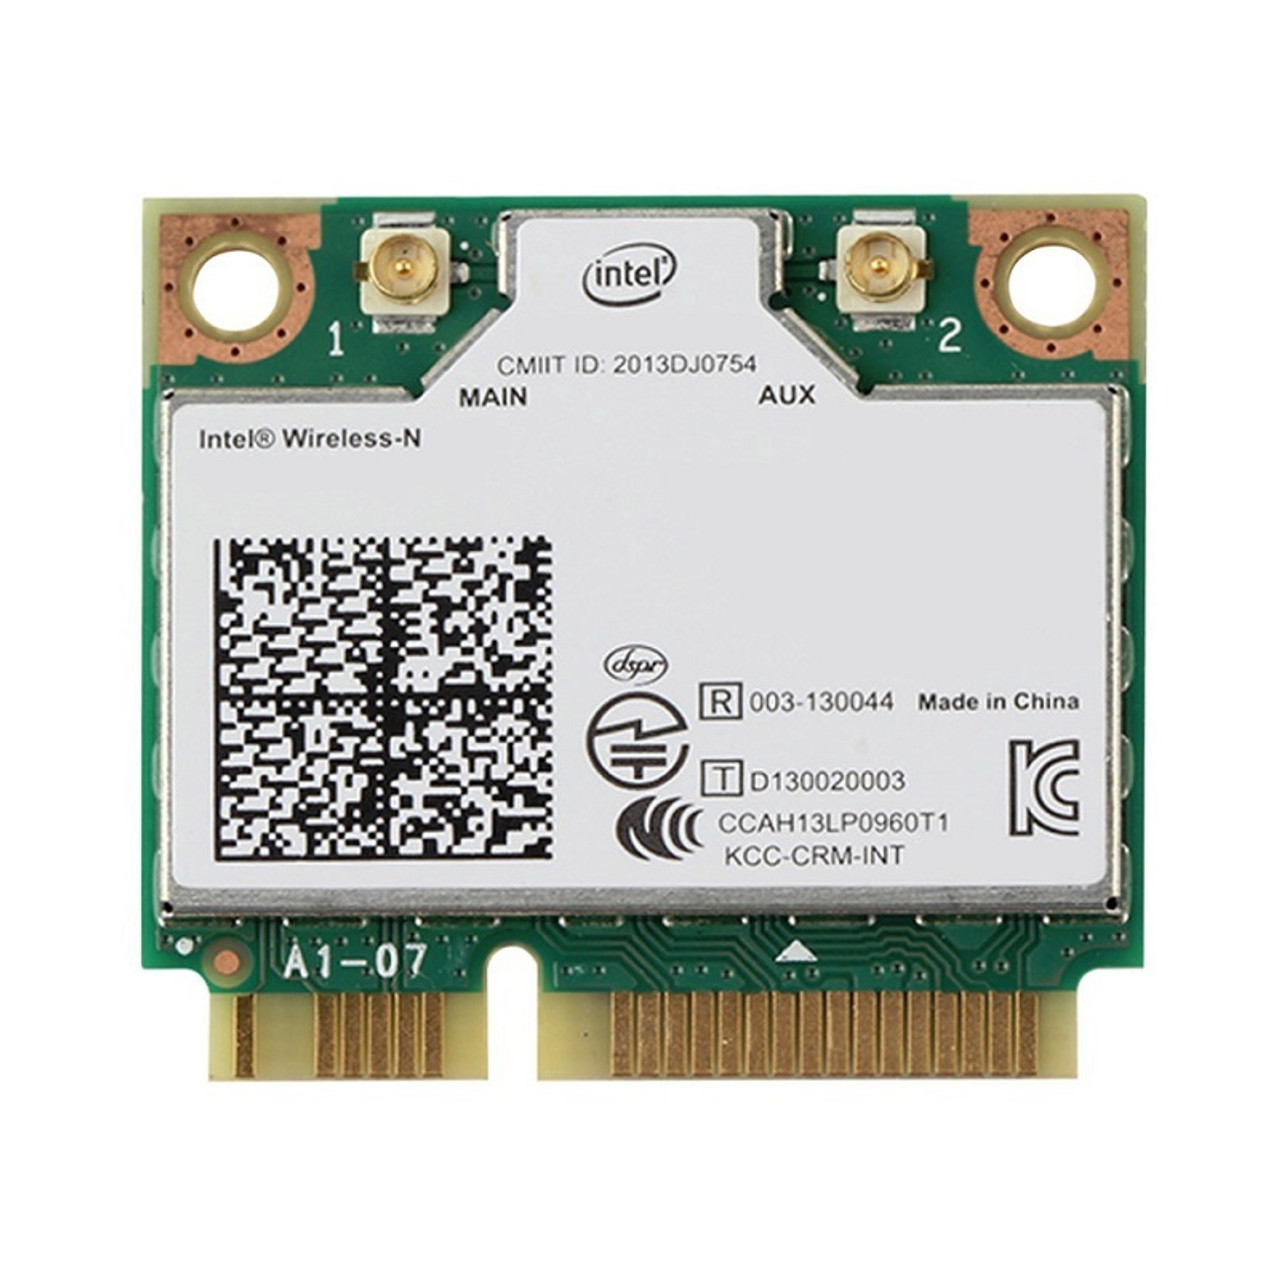 330888-001 - HP Mini PCI 802.11b/g Wireless Lan Card (WLAN) for NC4000 Business Notebook PC